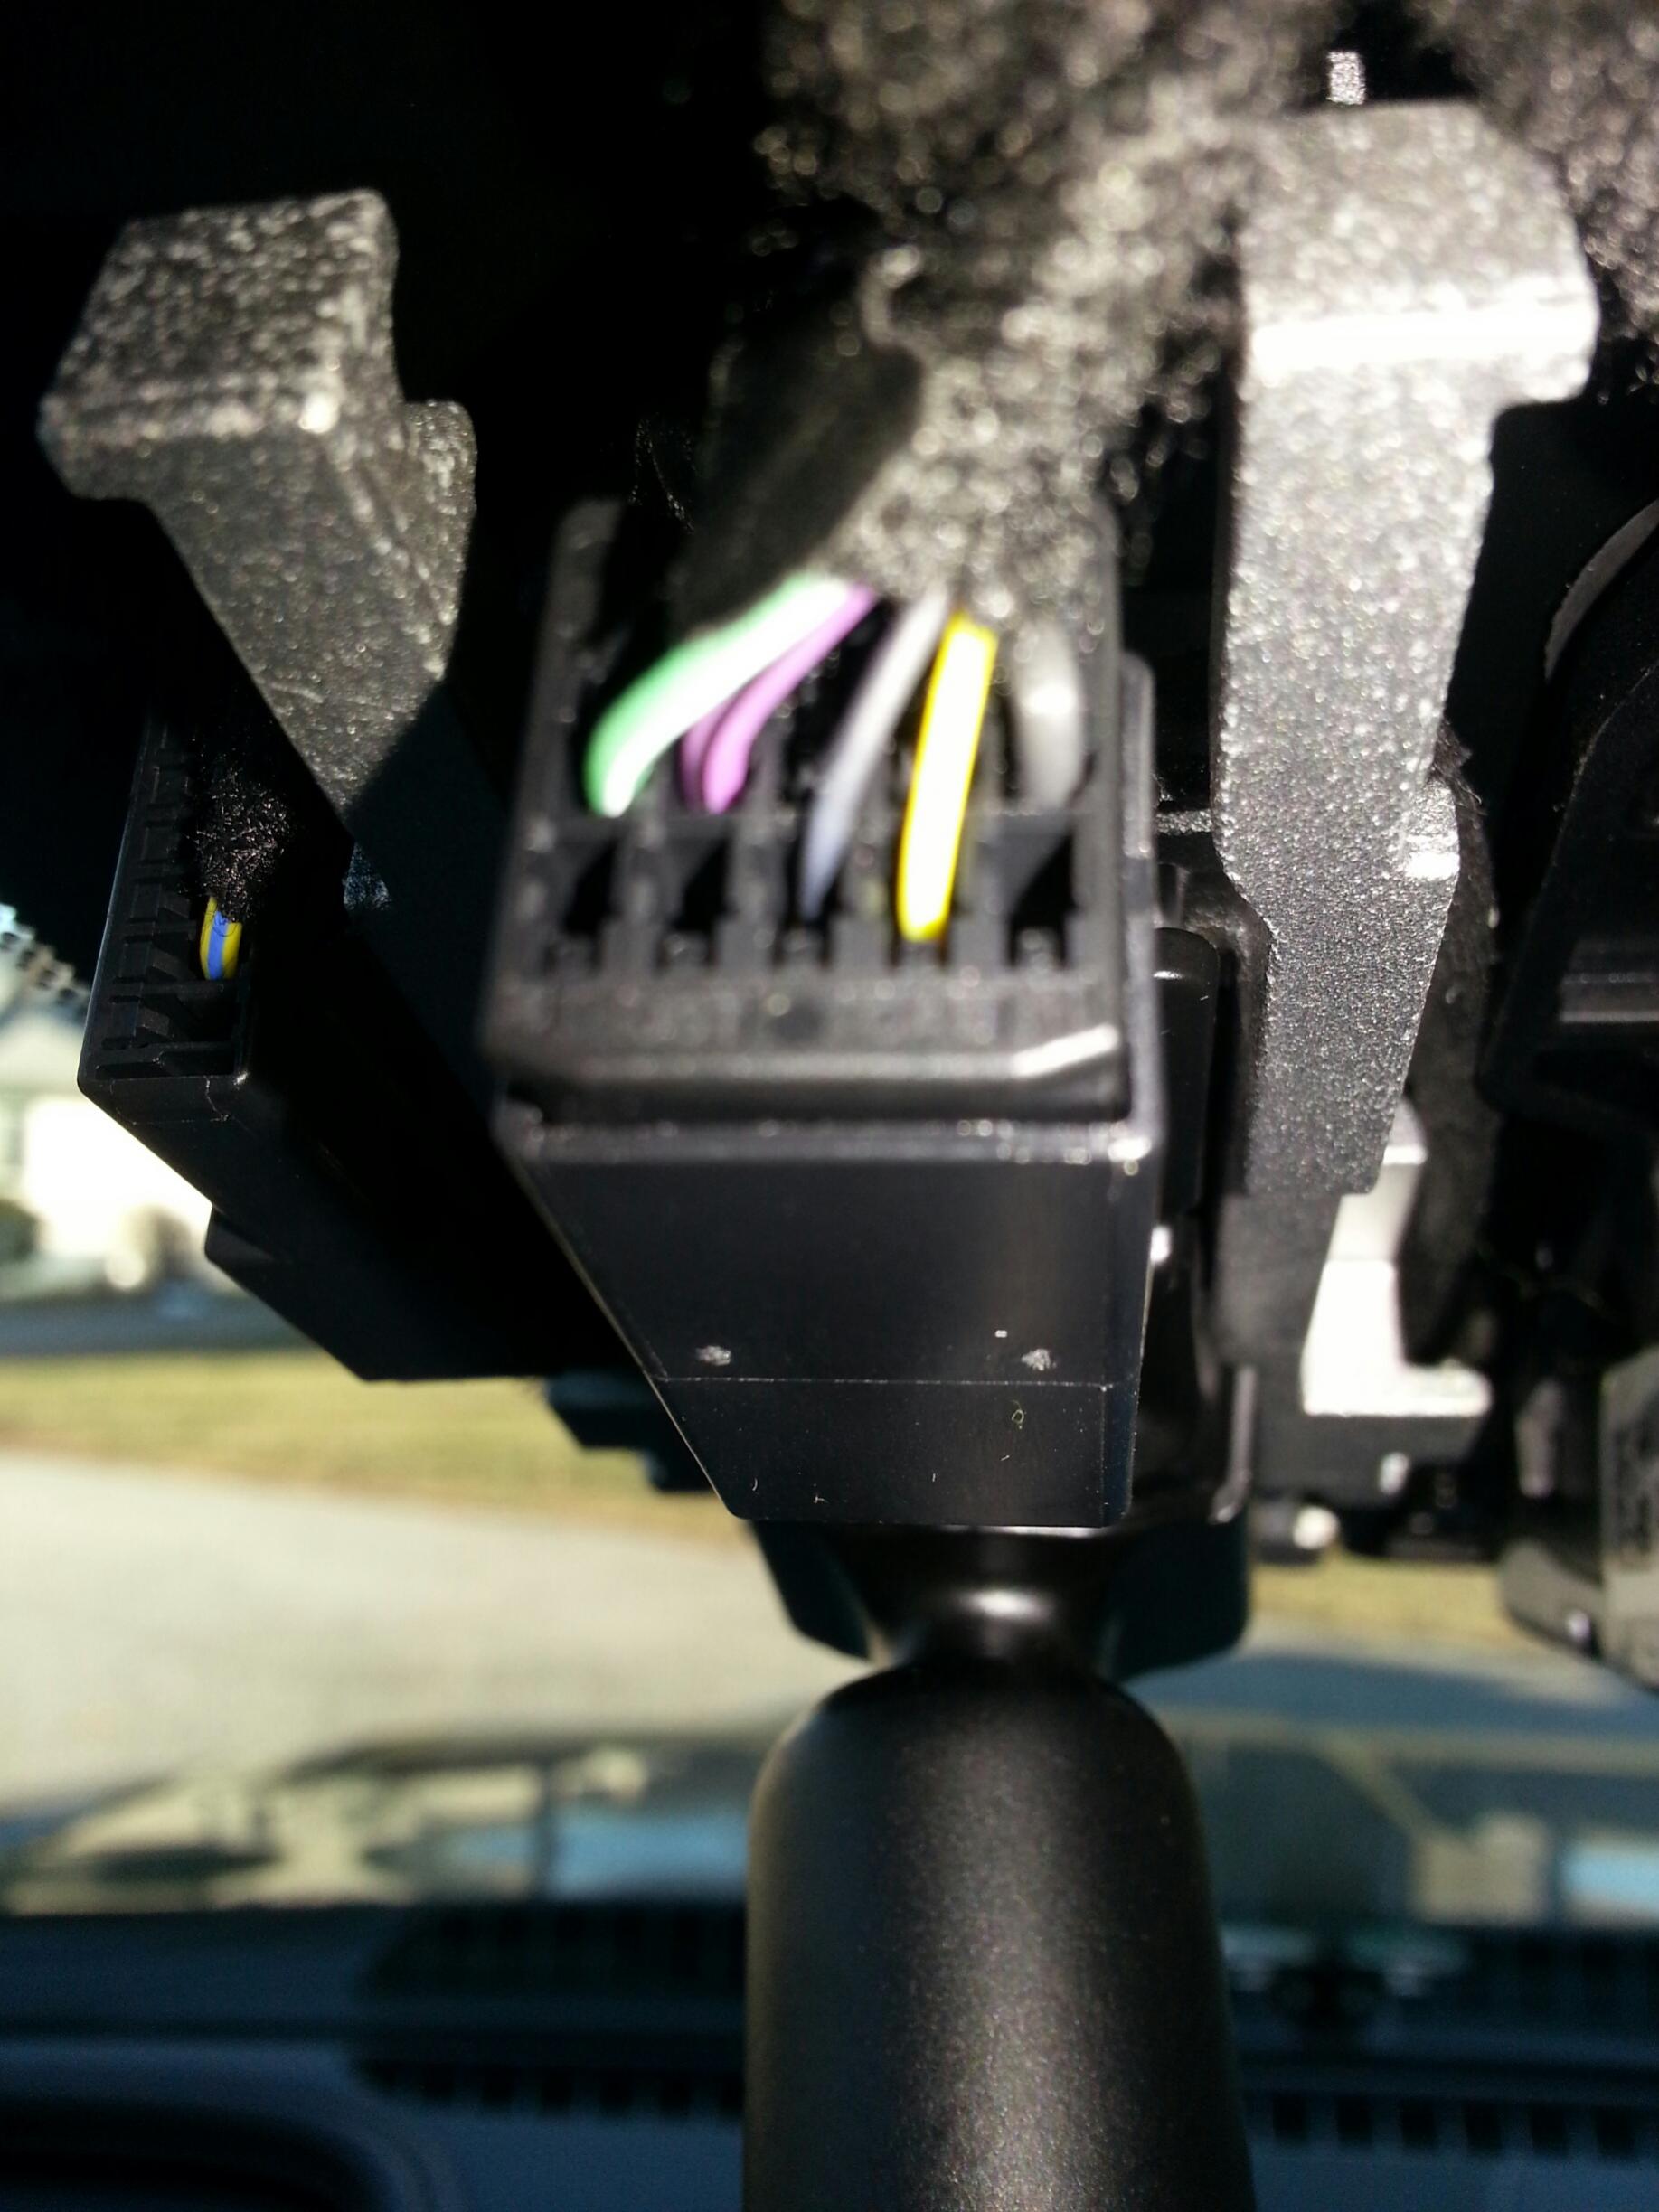 2014 Impala LTZ Mirror Tap/ Blend Mount for Radar Detector ... 2000 chevy tahoe wiring diagram 